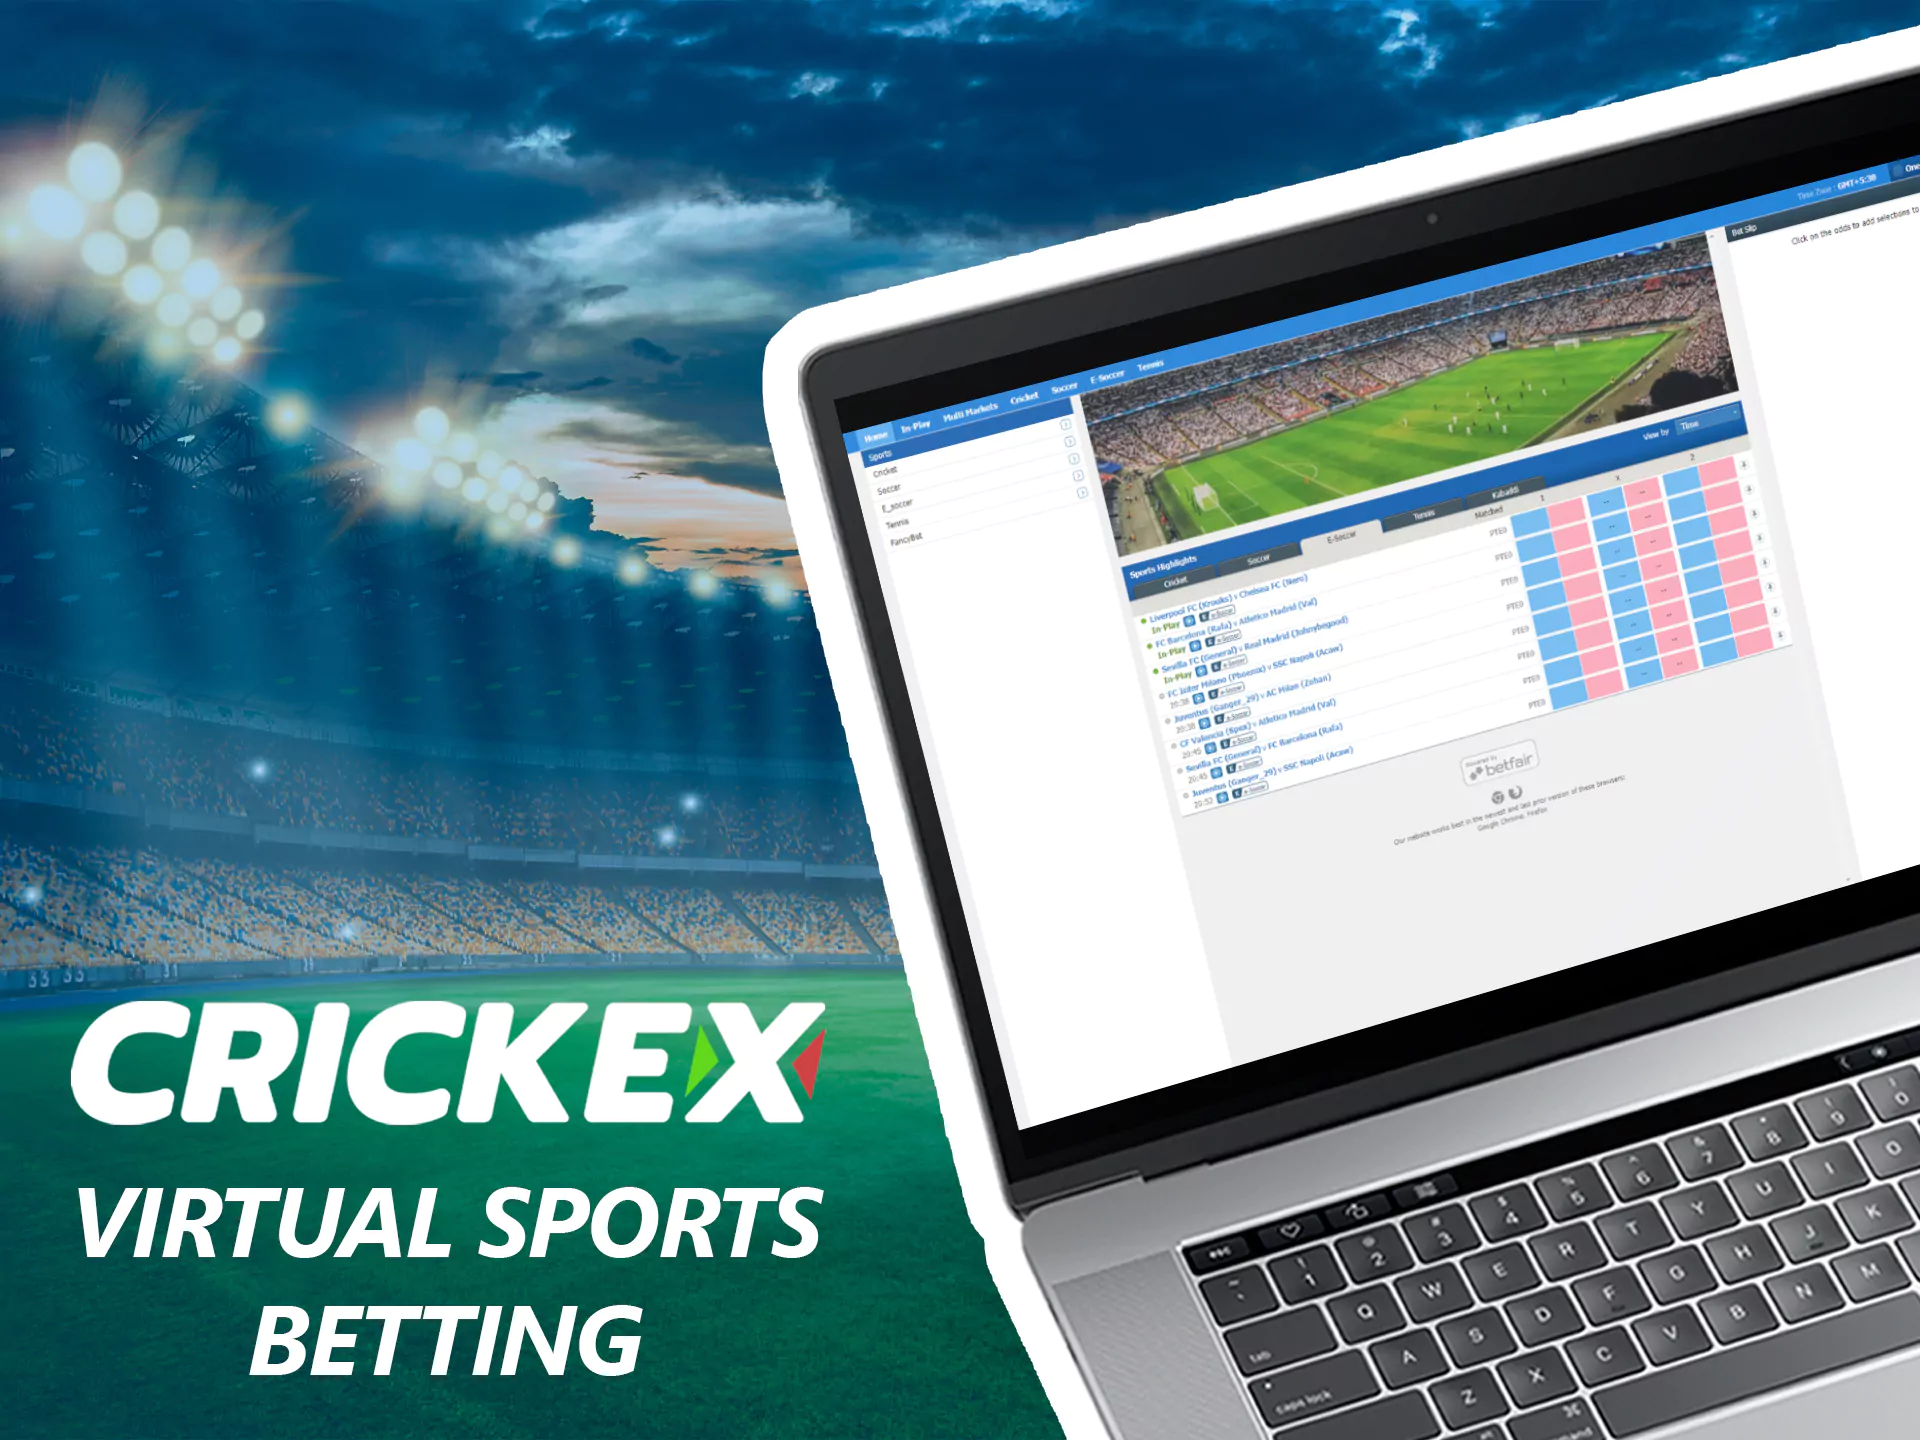 Bet on virtual sports on Crickex.